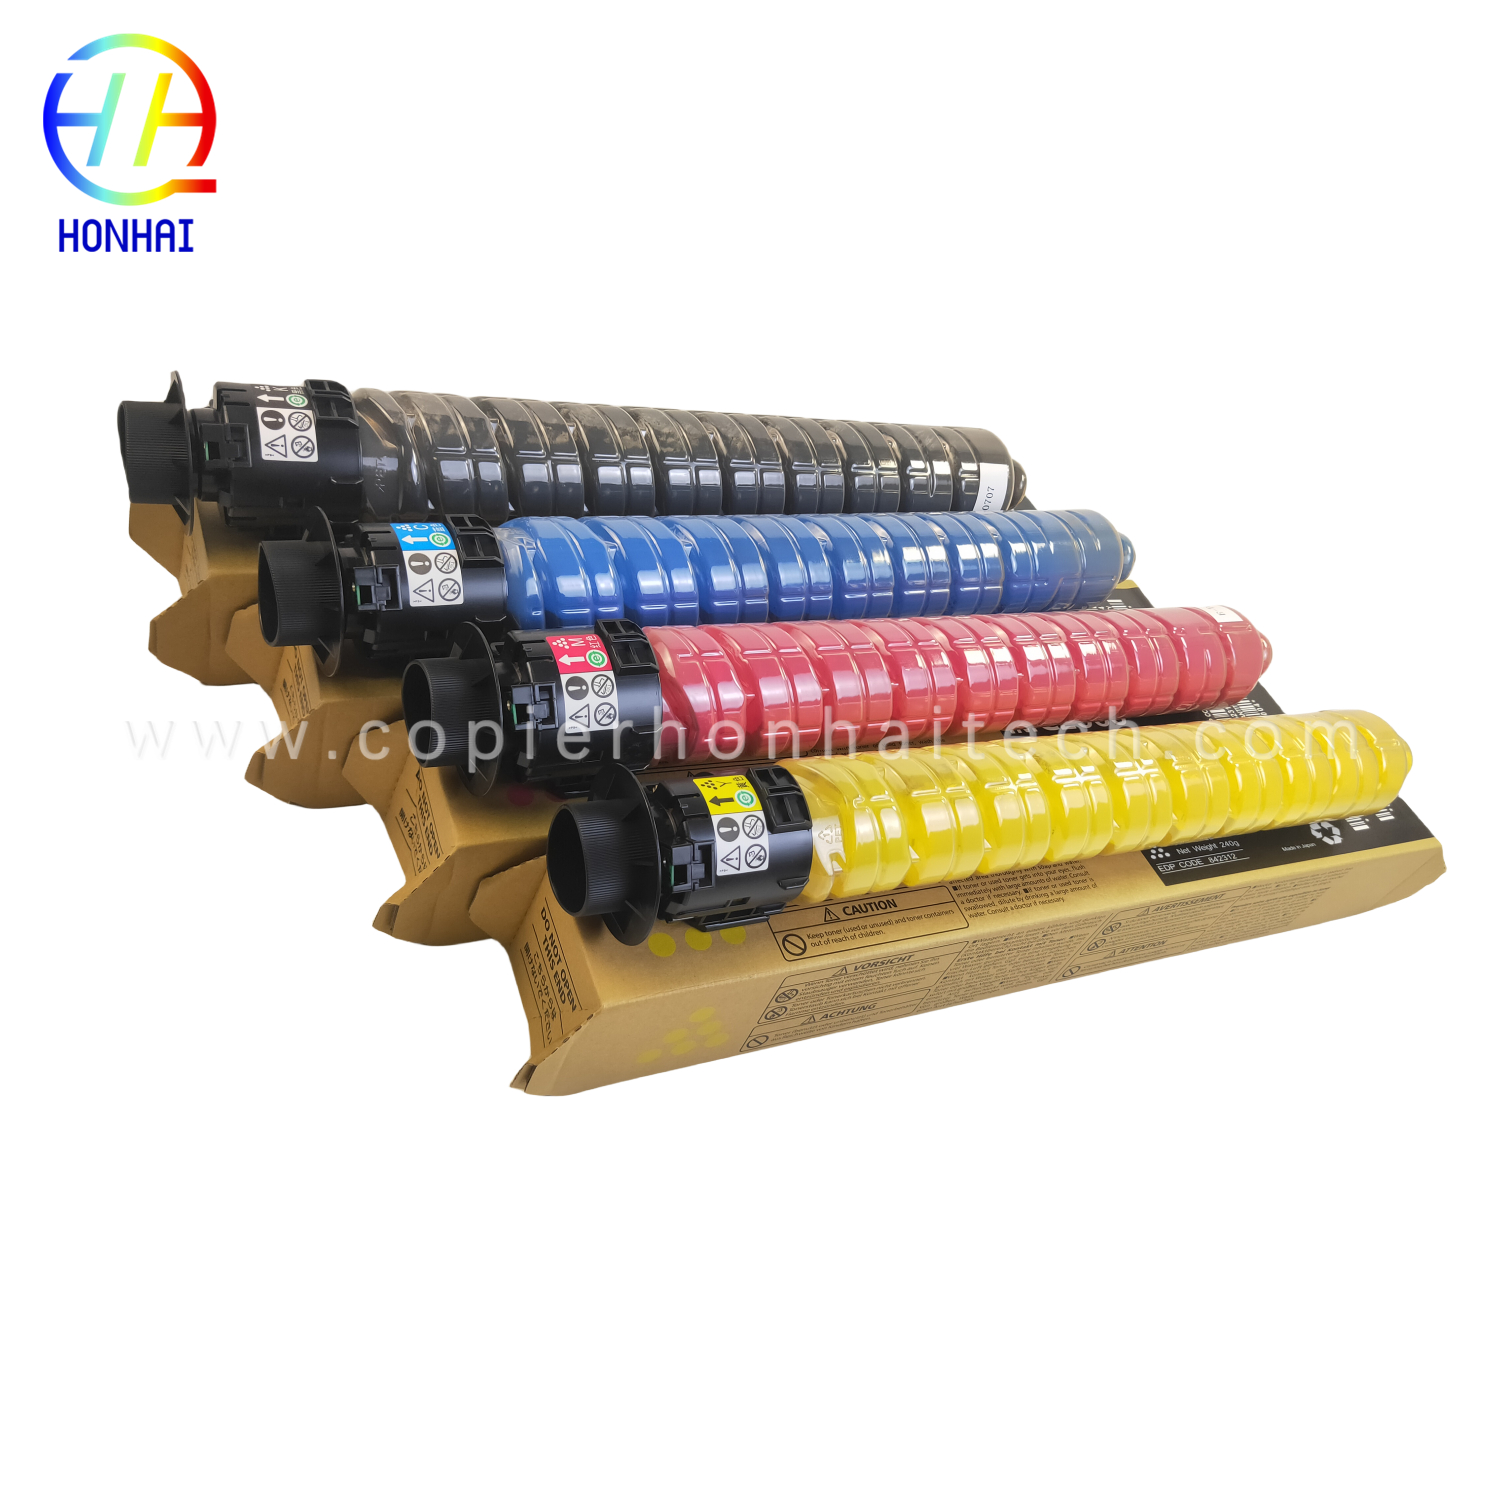 https://www.copierhonhaitech.com/copy-color-toner-cartridge-for-ricoh-aficio-mp-c2000-2500-3000-spc810-811-821-c2500c-samfurin/